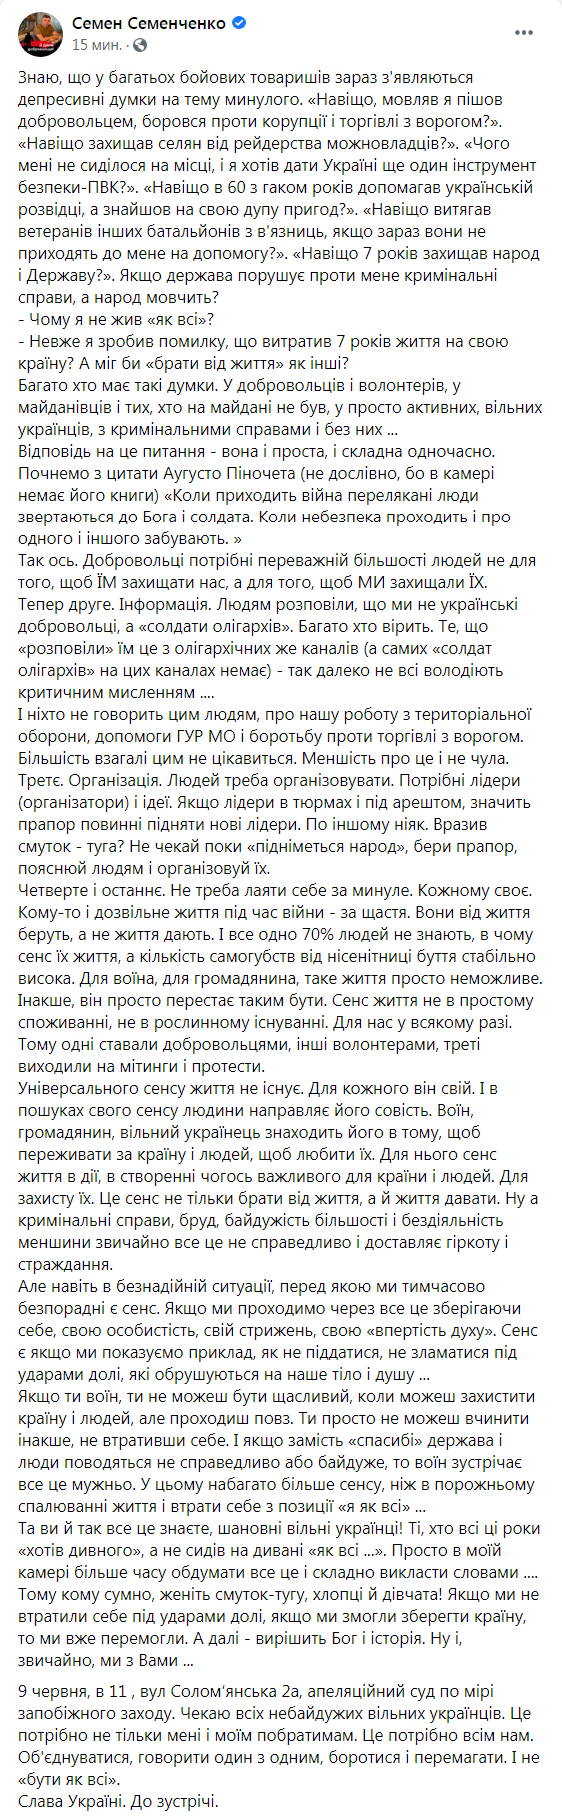 Скриншот из Фейсбука Семена Семенченко